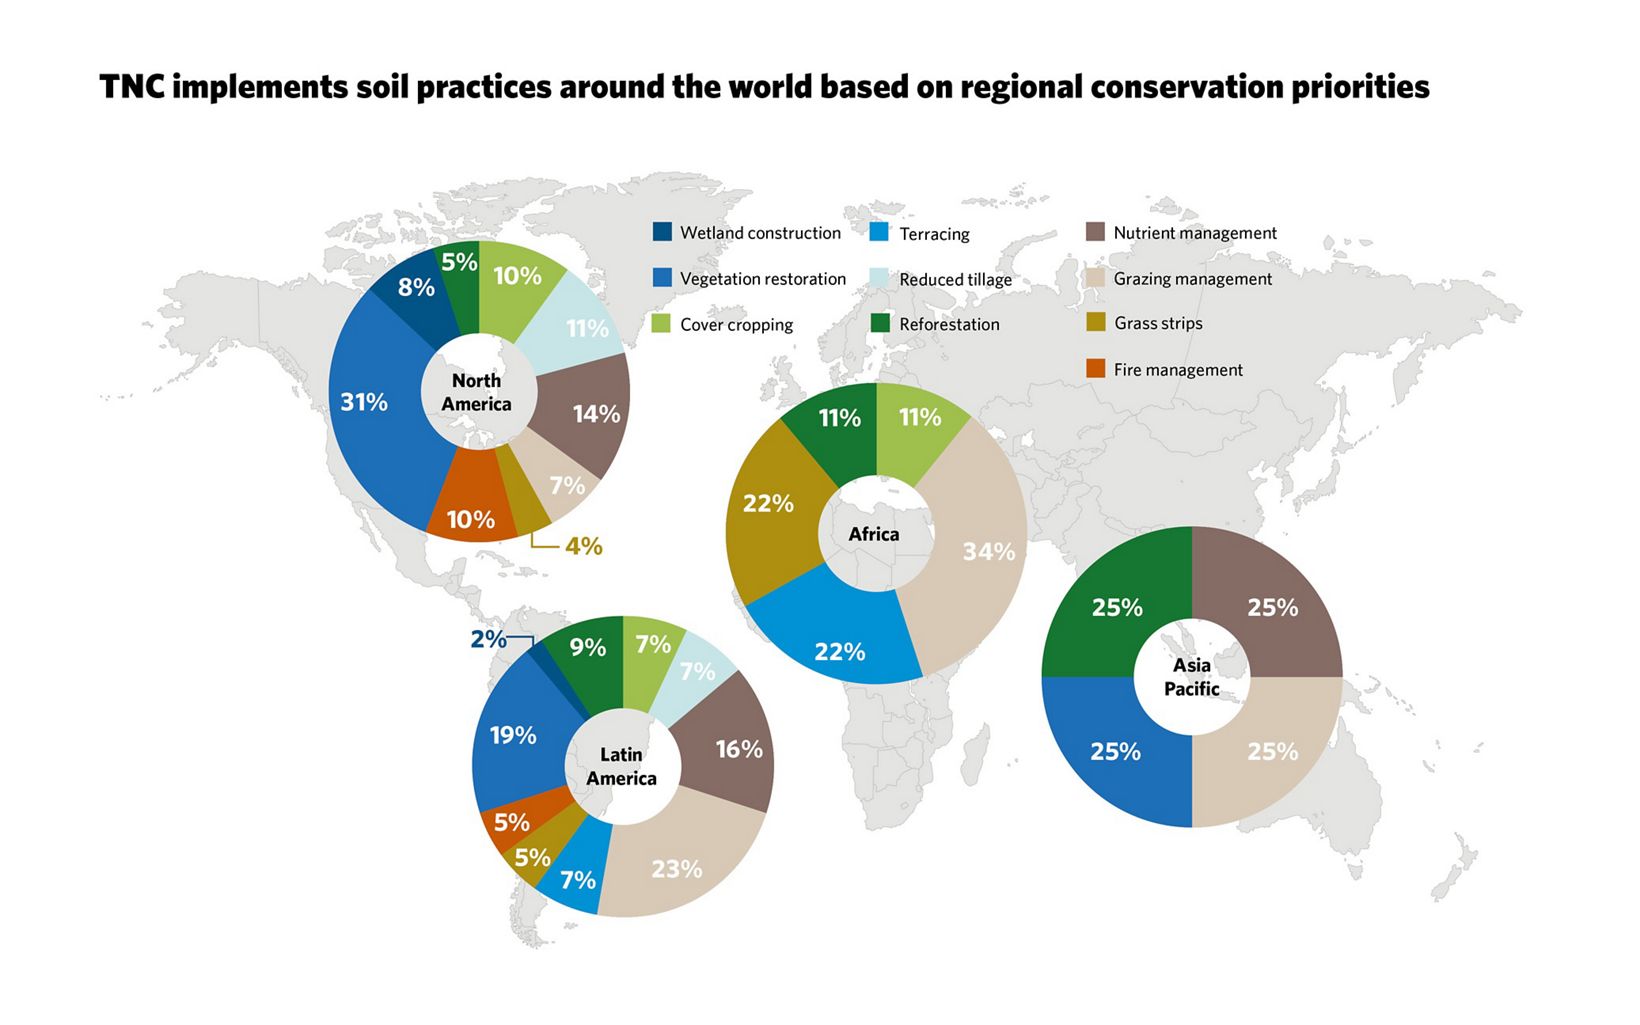 Soil practices around the world